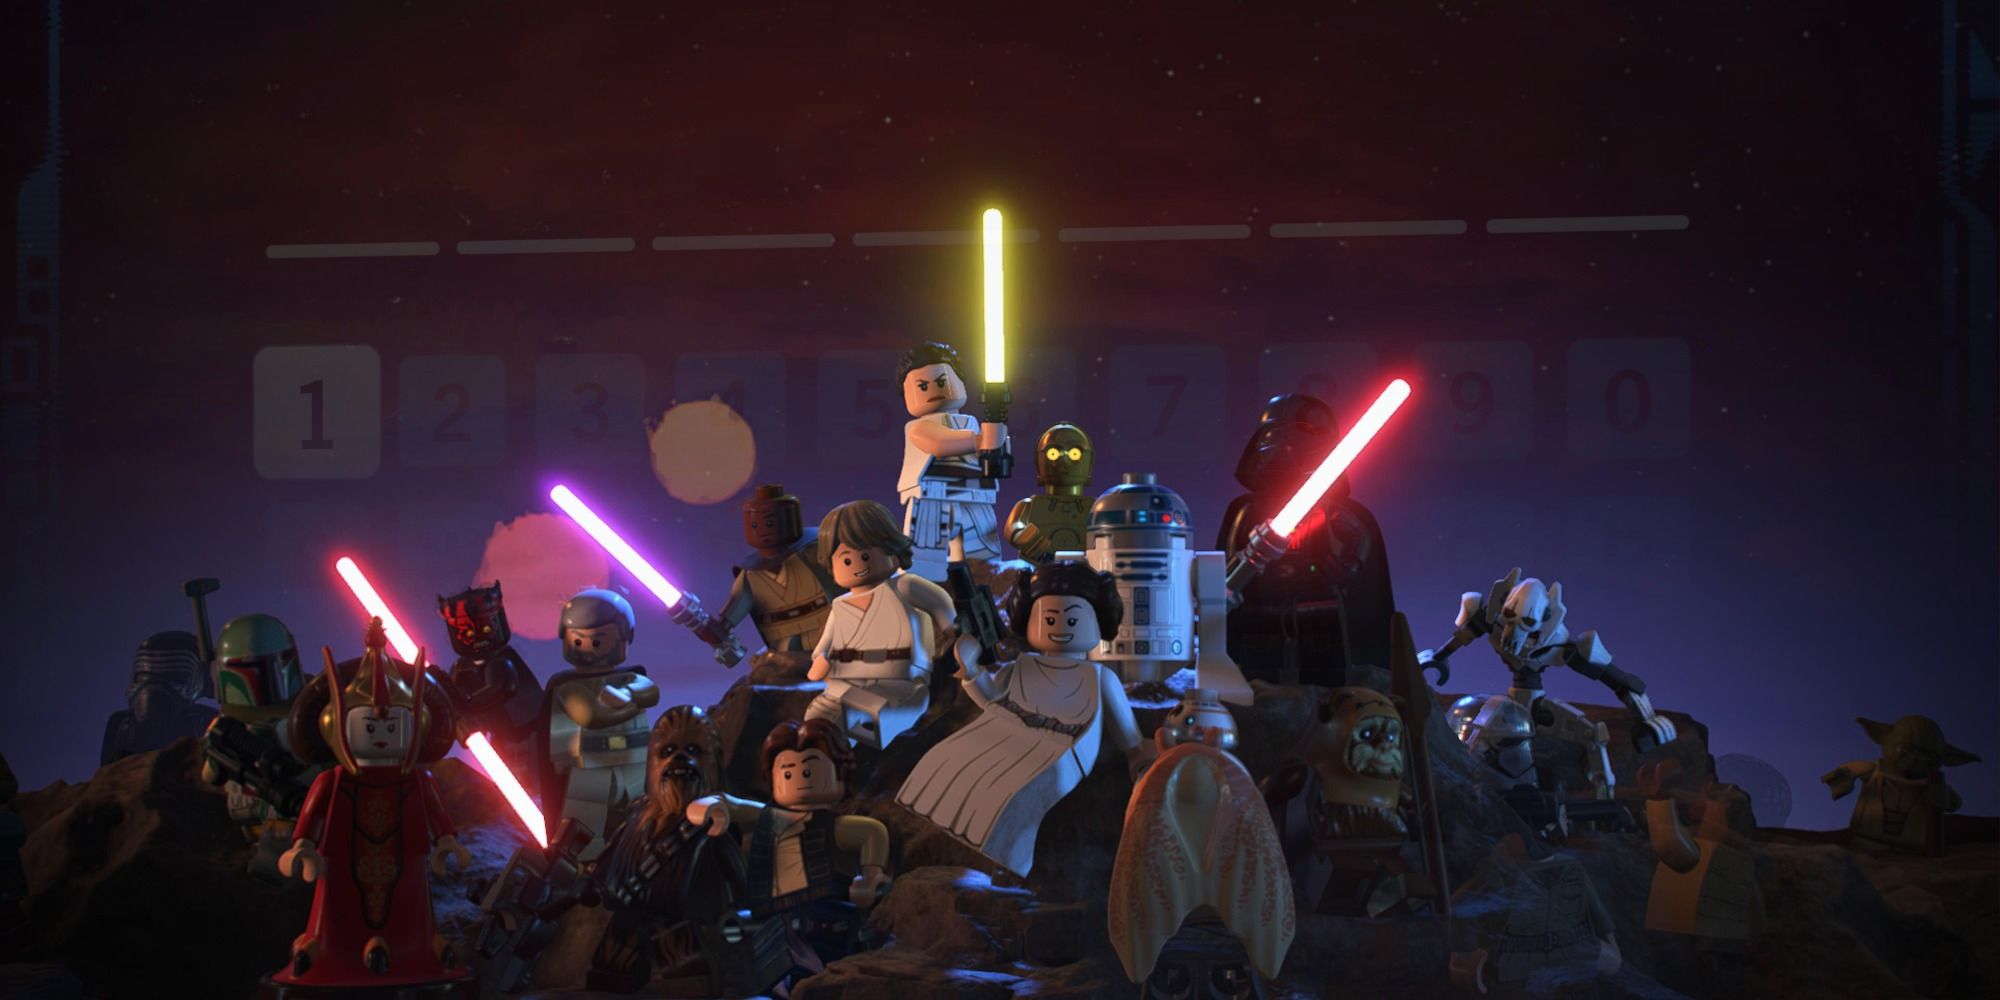 EXCLUSIVE Unlock Codes! Lego Star Wars The Skywalker Saga Guide